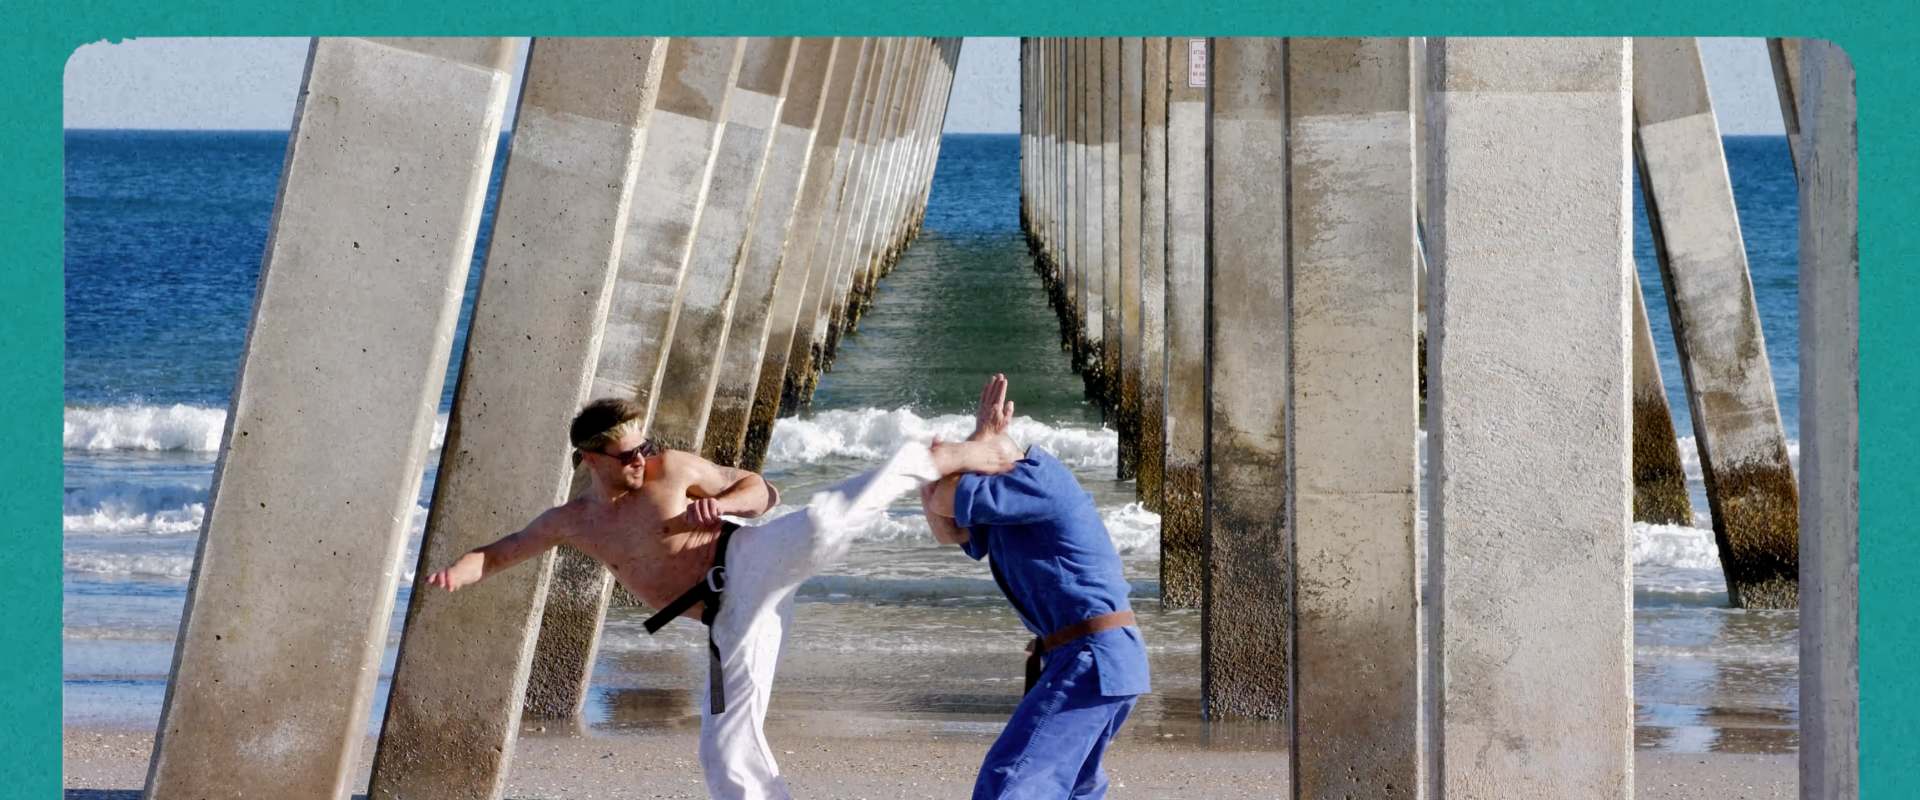 Kali Karate: The 2nd Beginning background 2